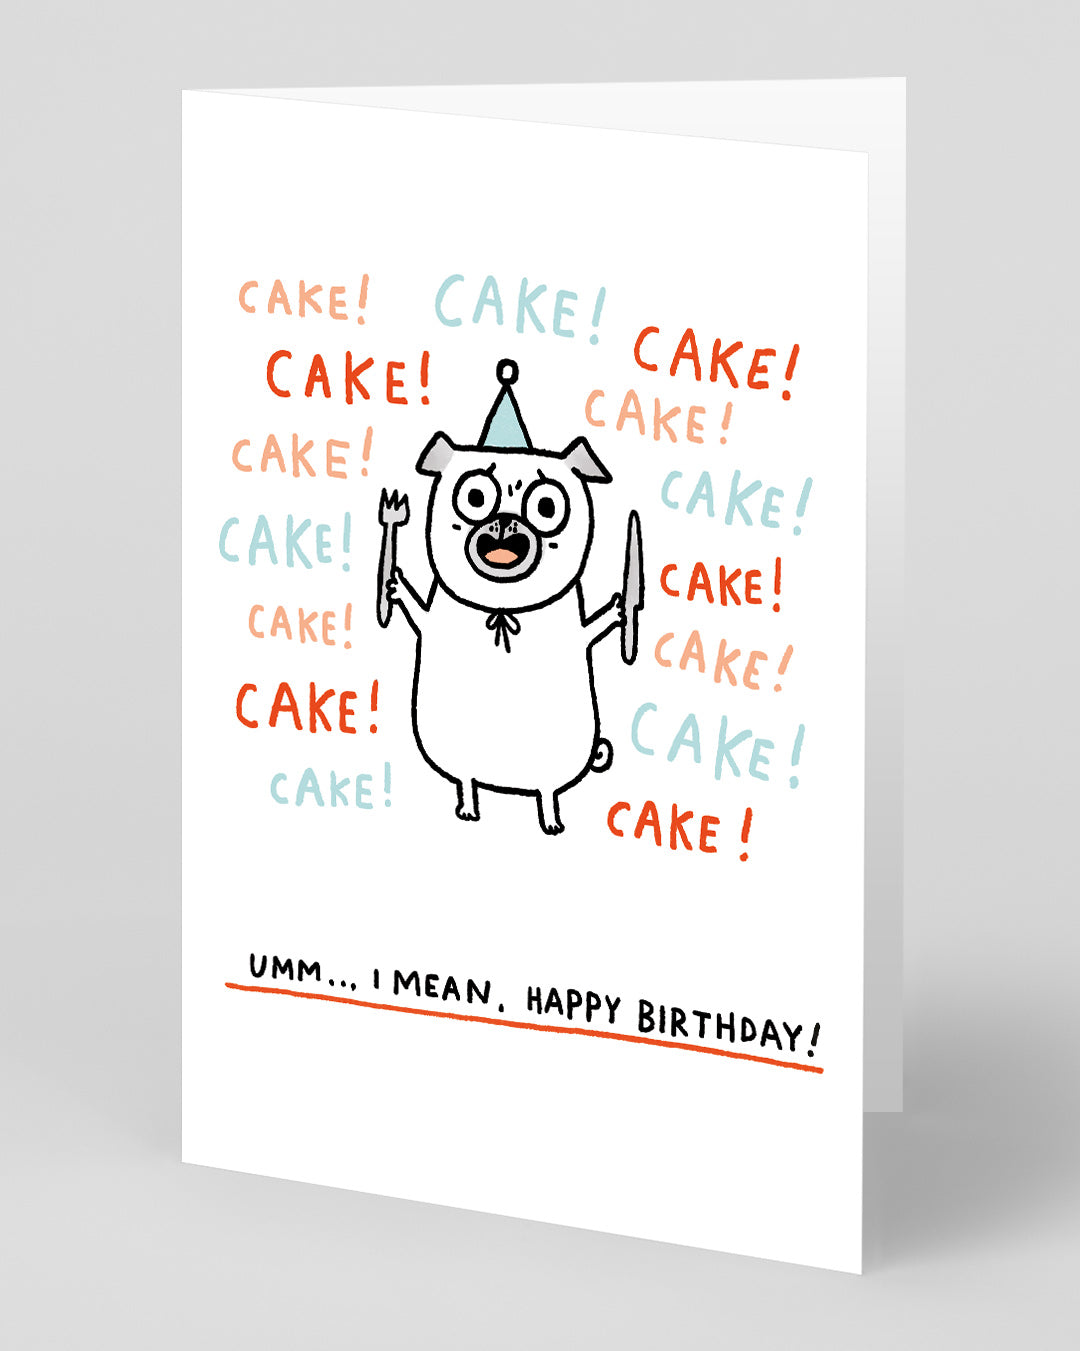 Funny Birthday Card Cake! Cake! Cake! Birthday Card